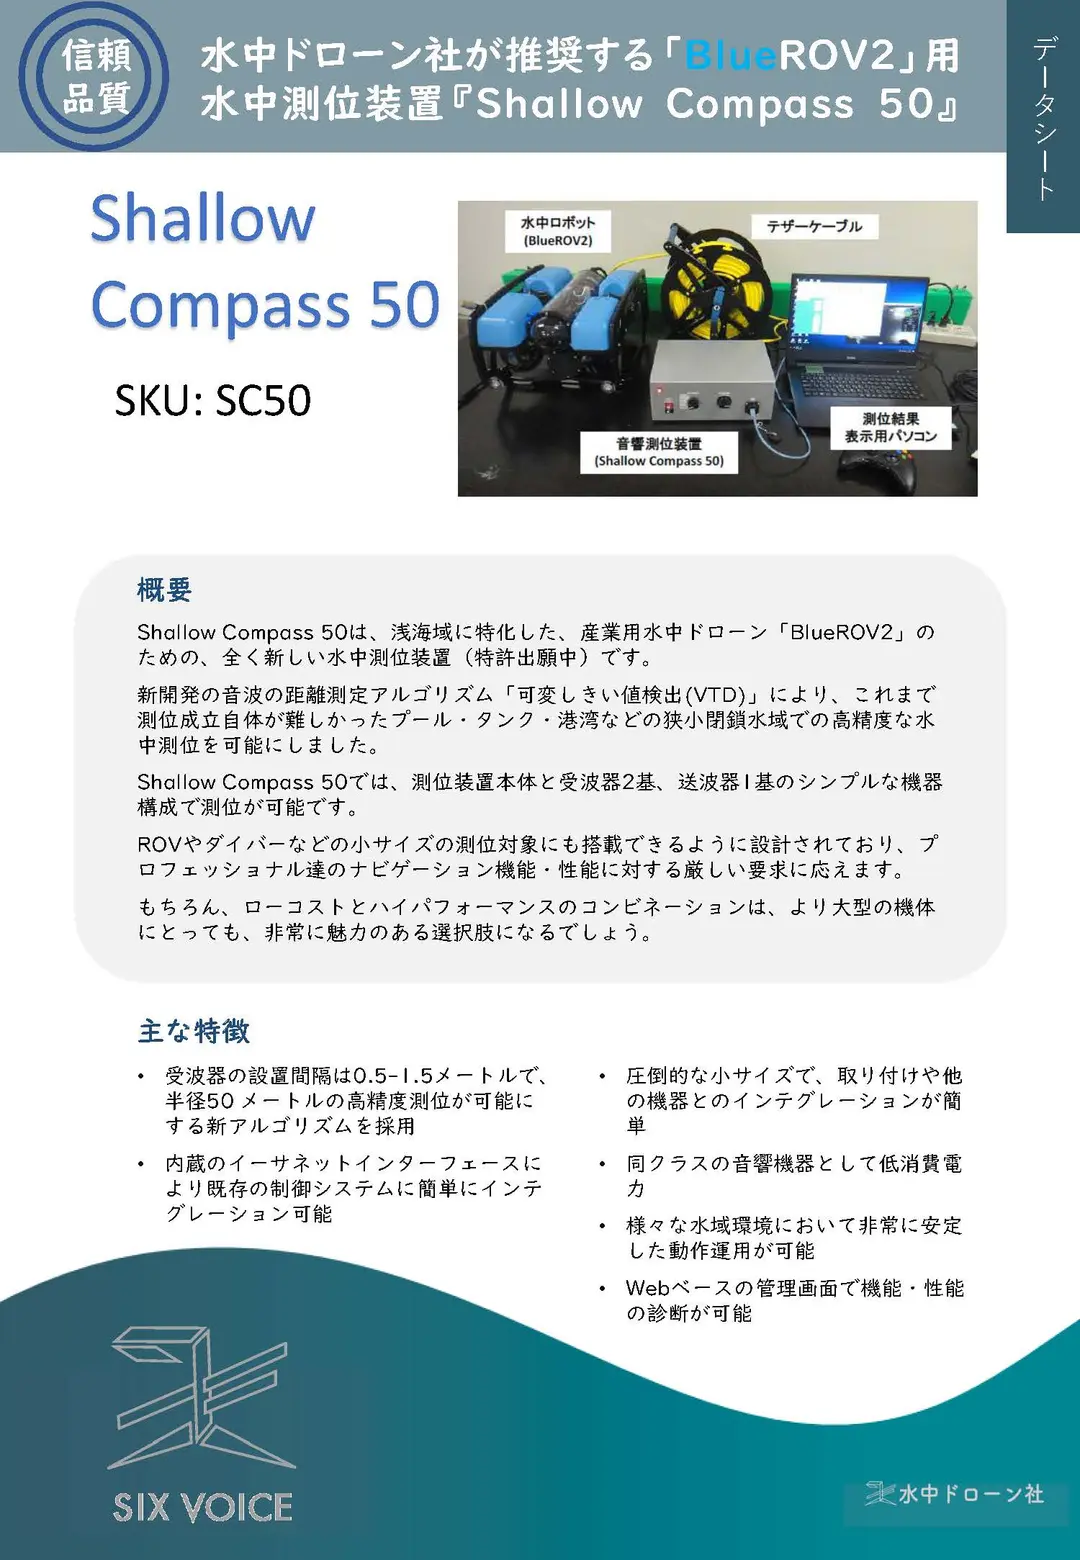 【国産】BlueROV2対応水中測位装置「Shallow Compass 50」